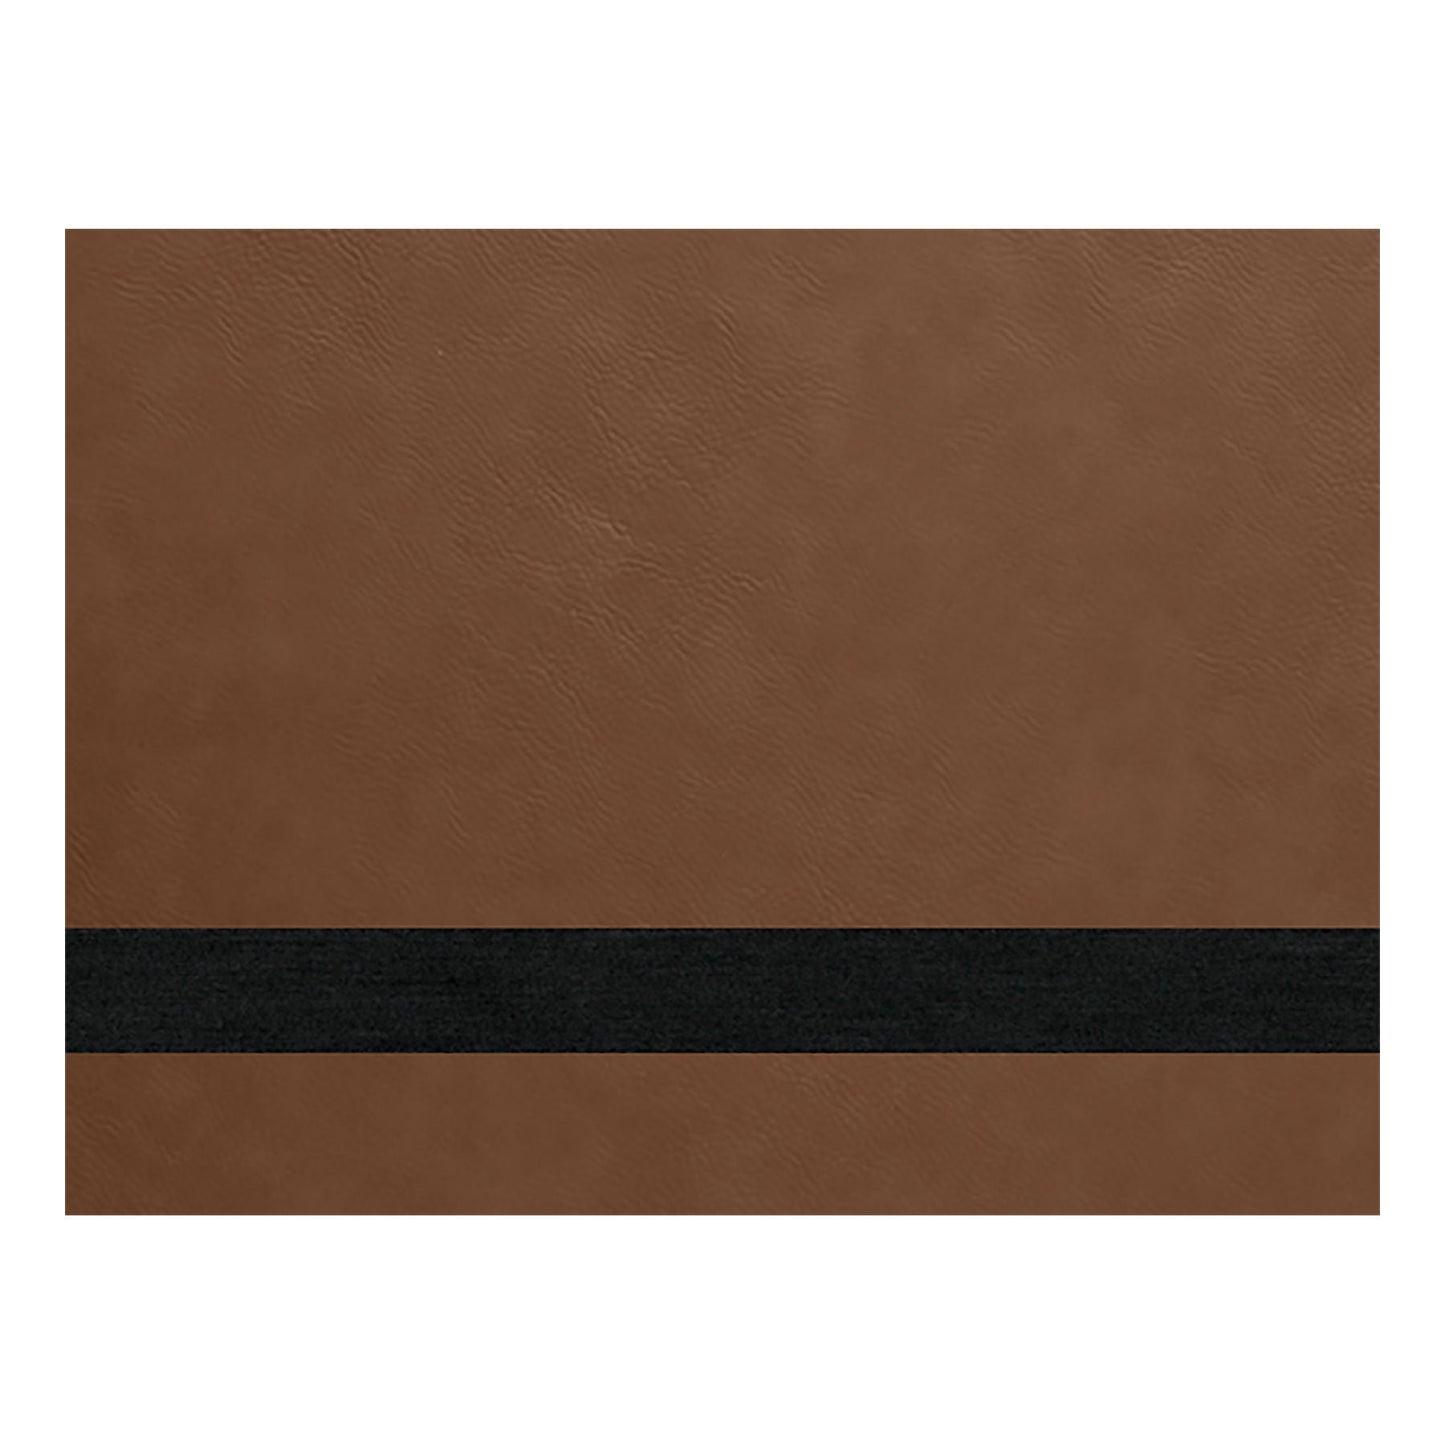 Leatherette Sheets - 12" x 24"